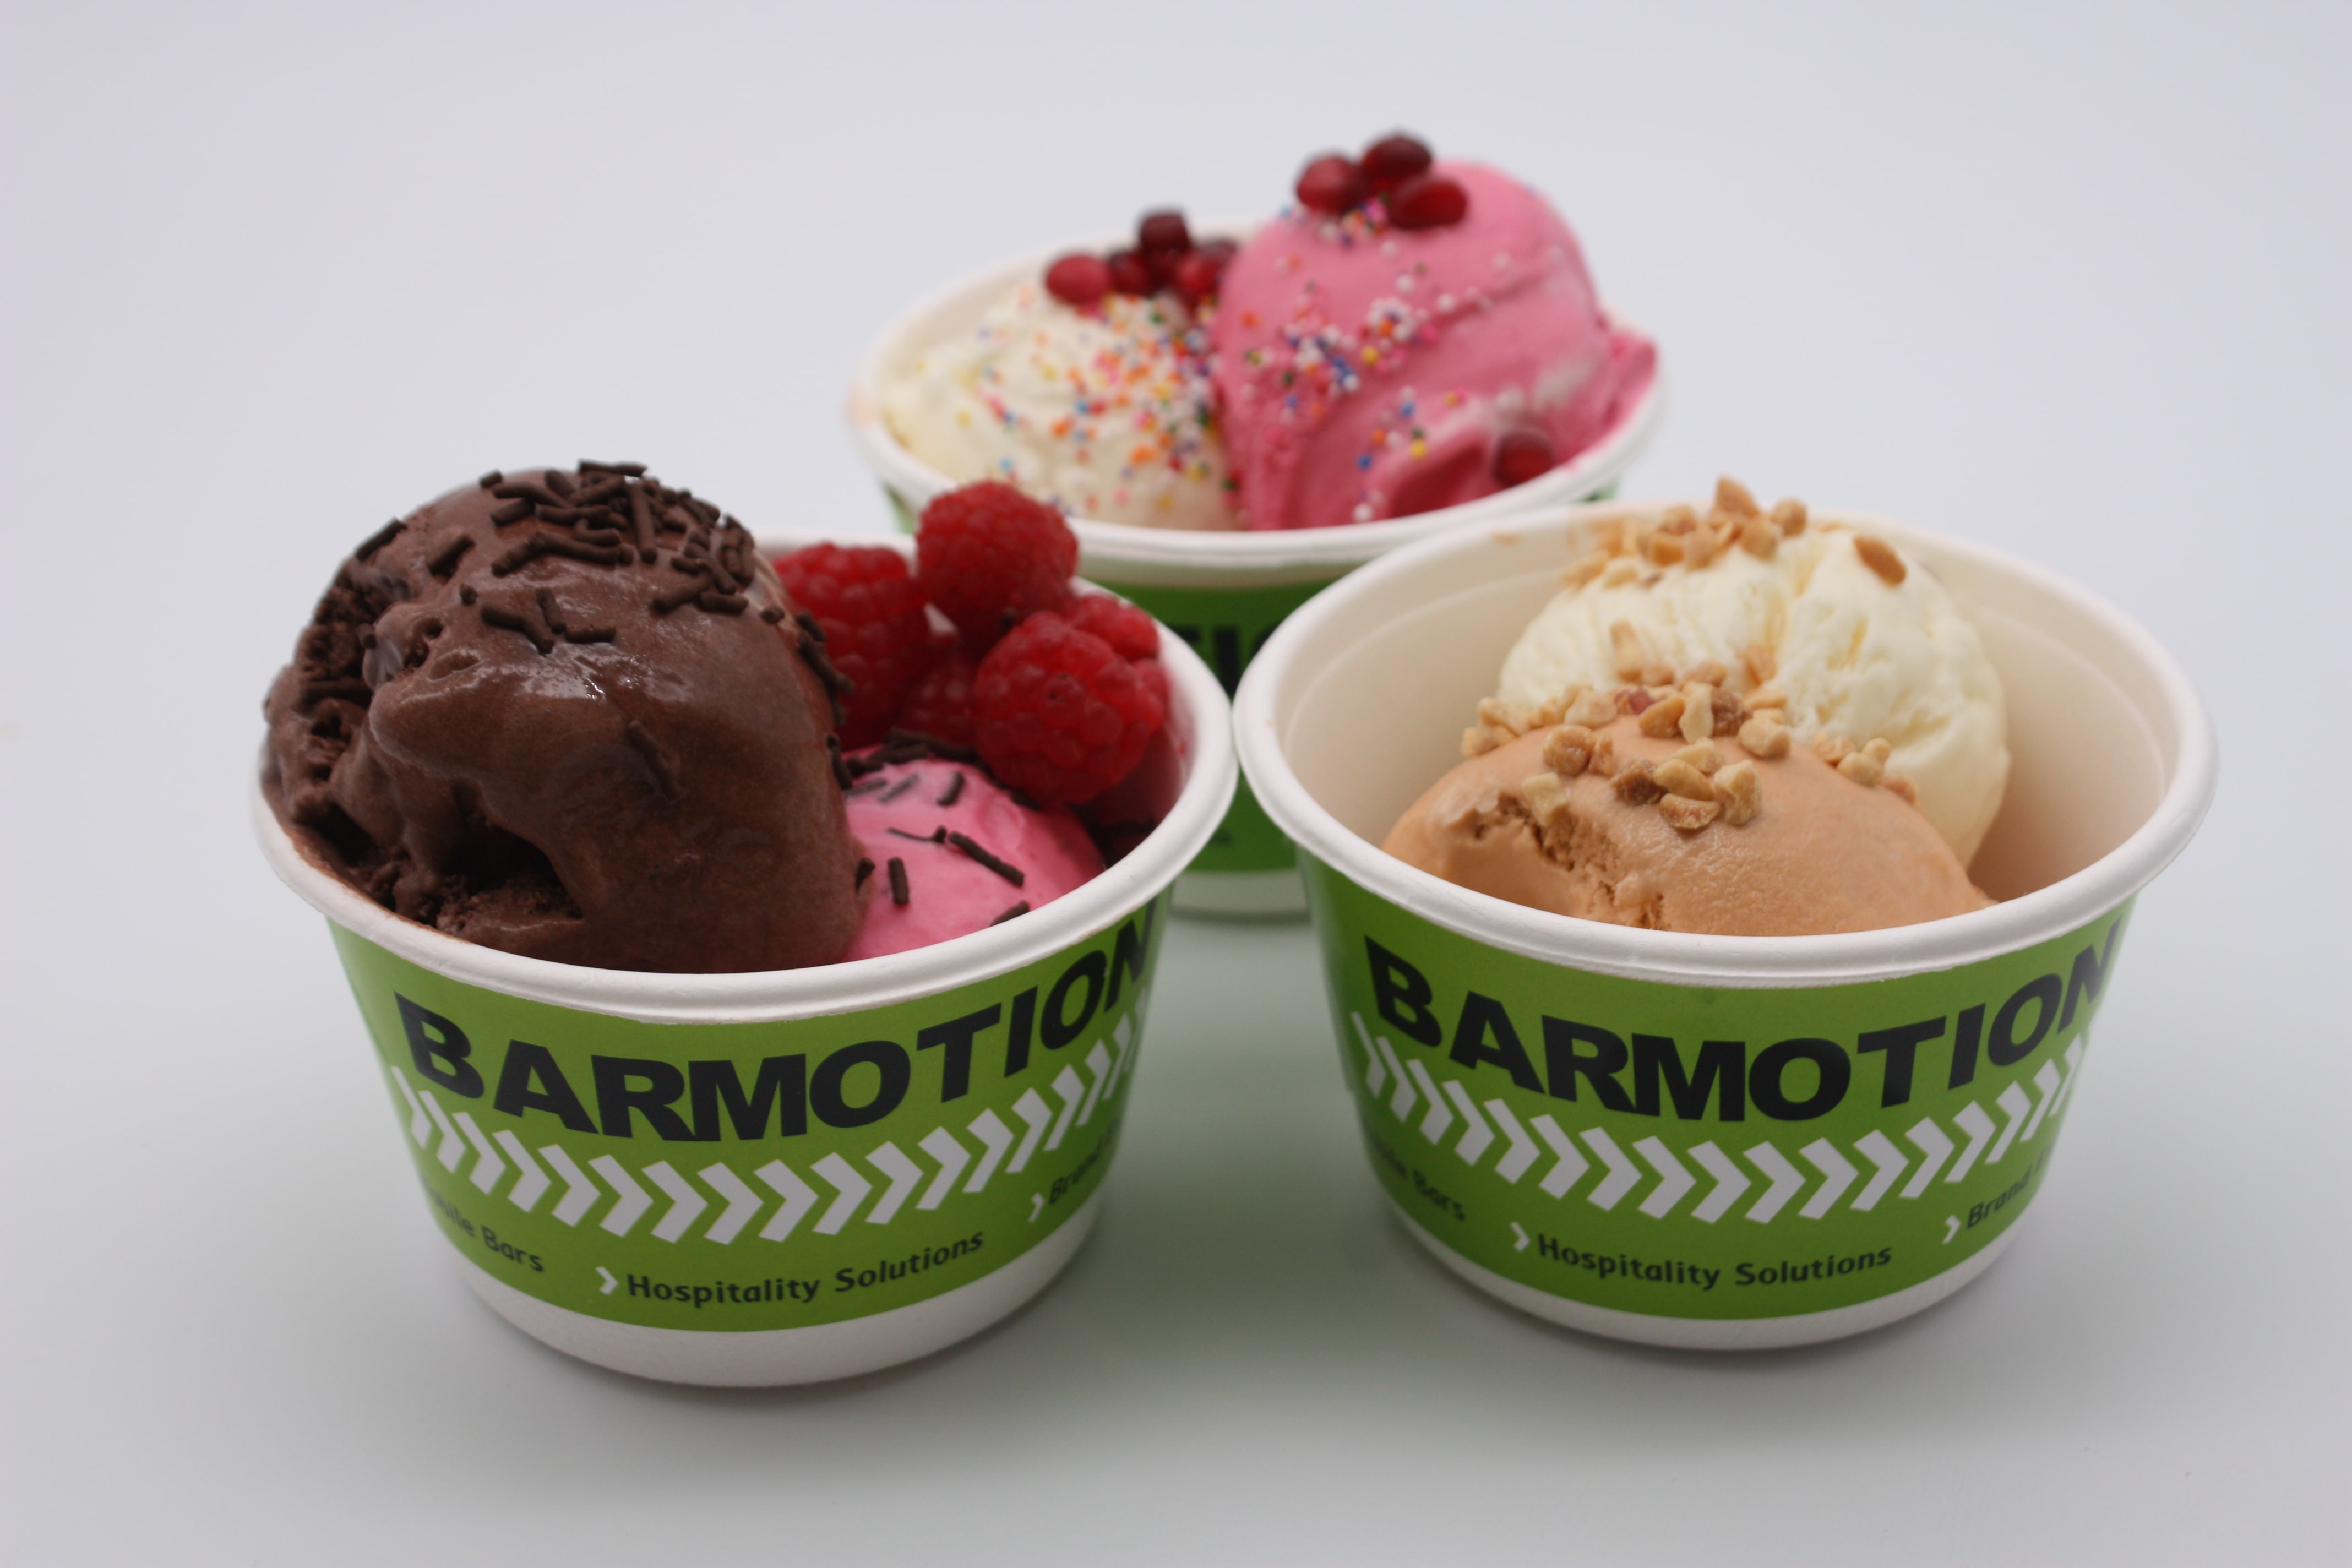 Barmotion Ice Cream Bar